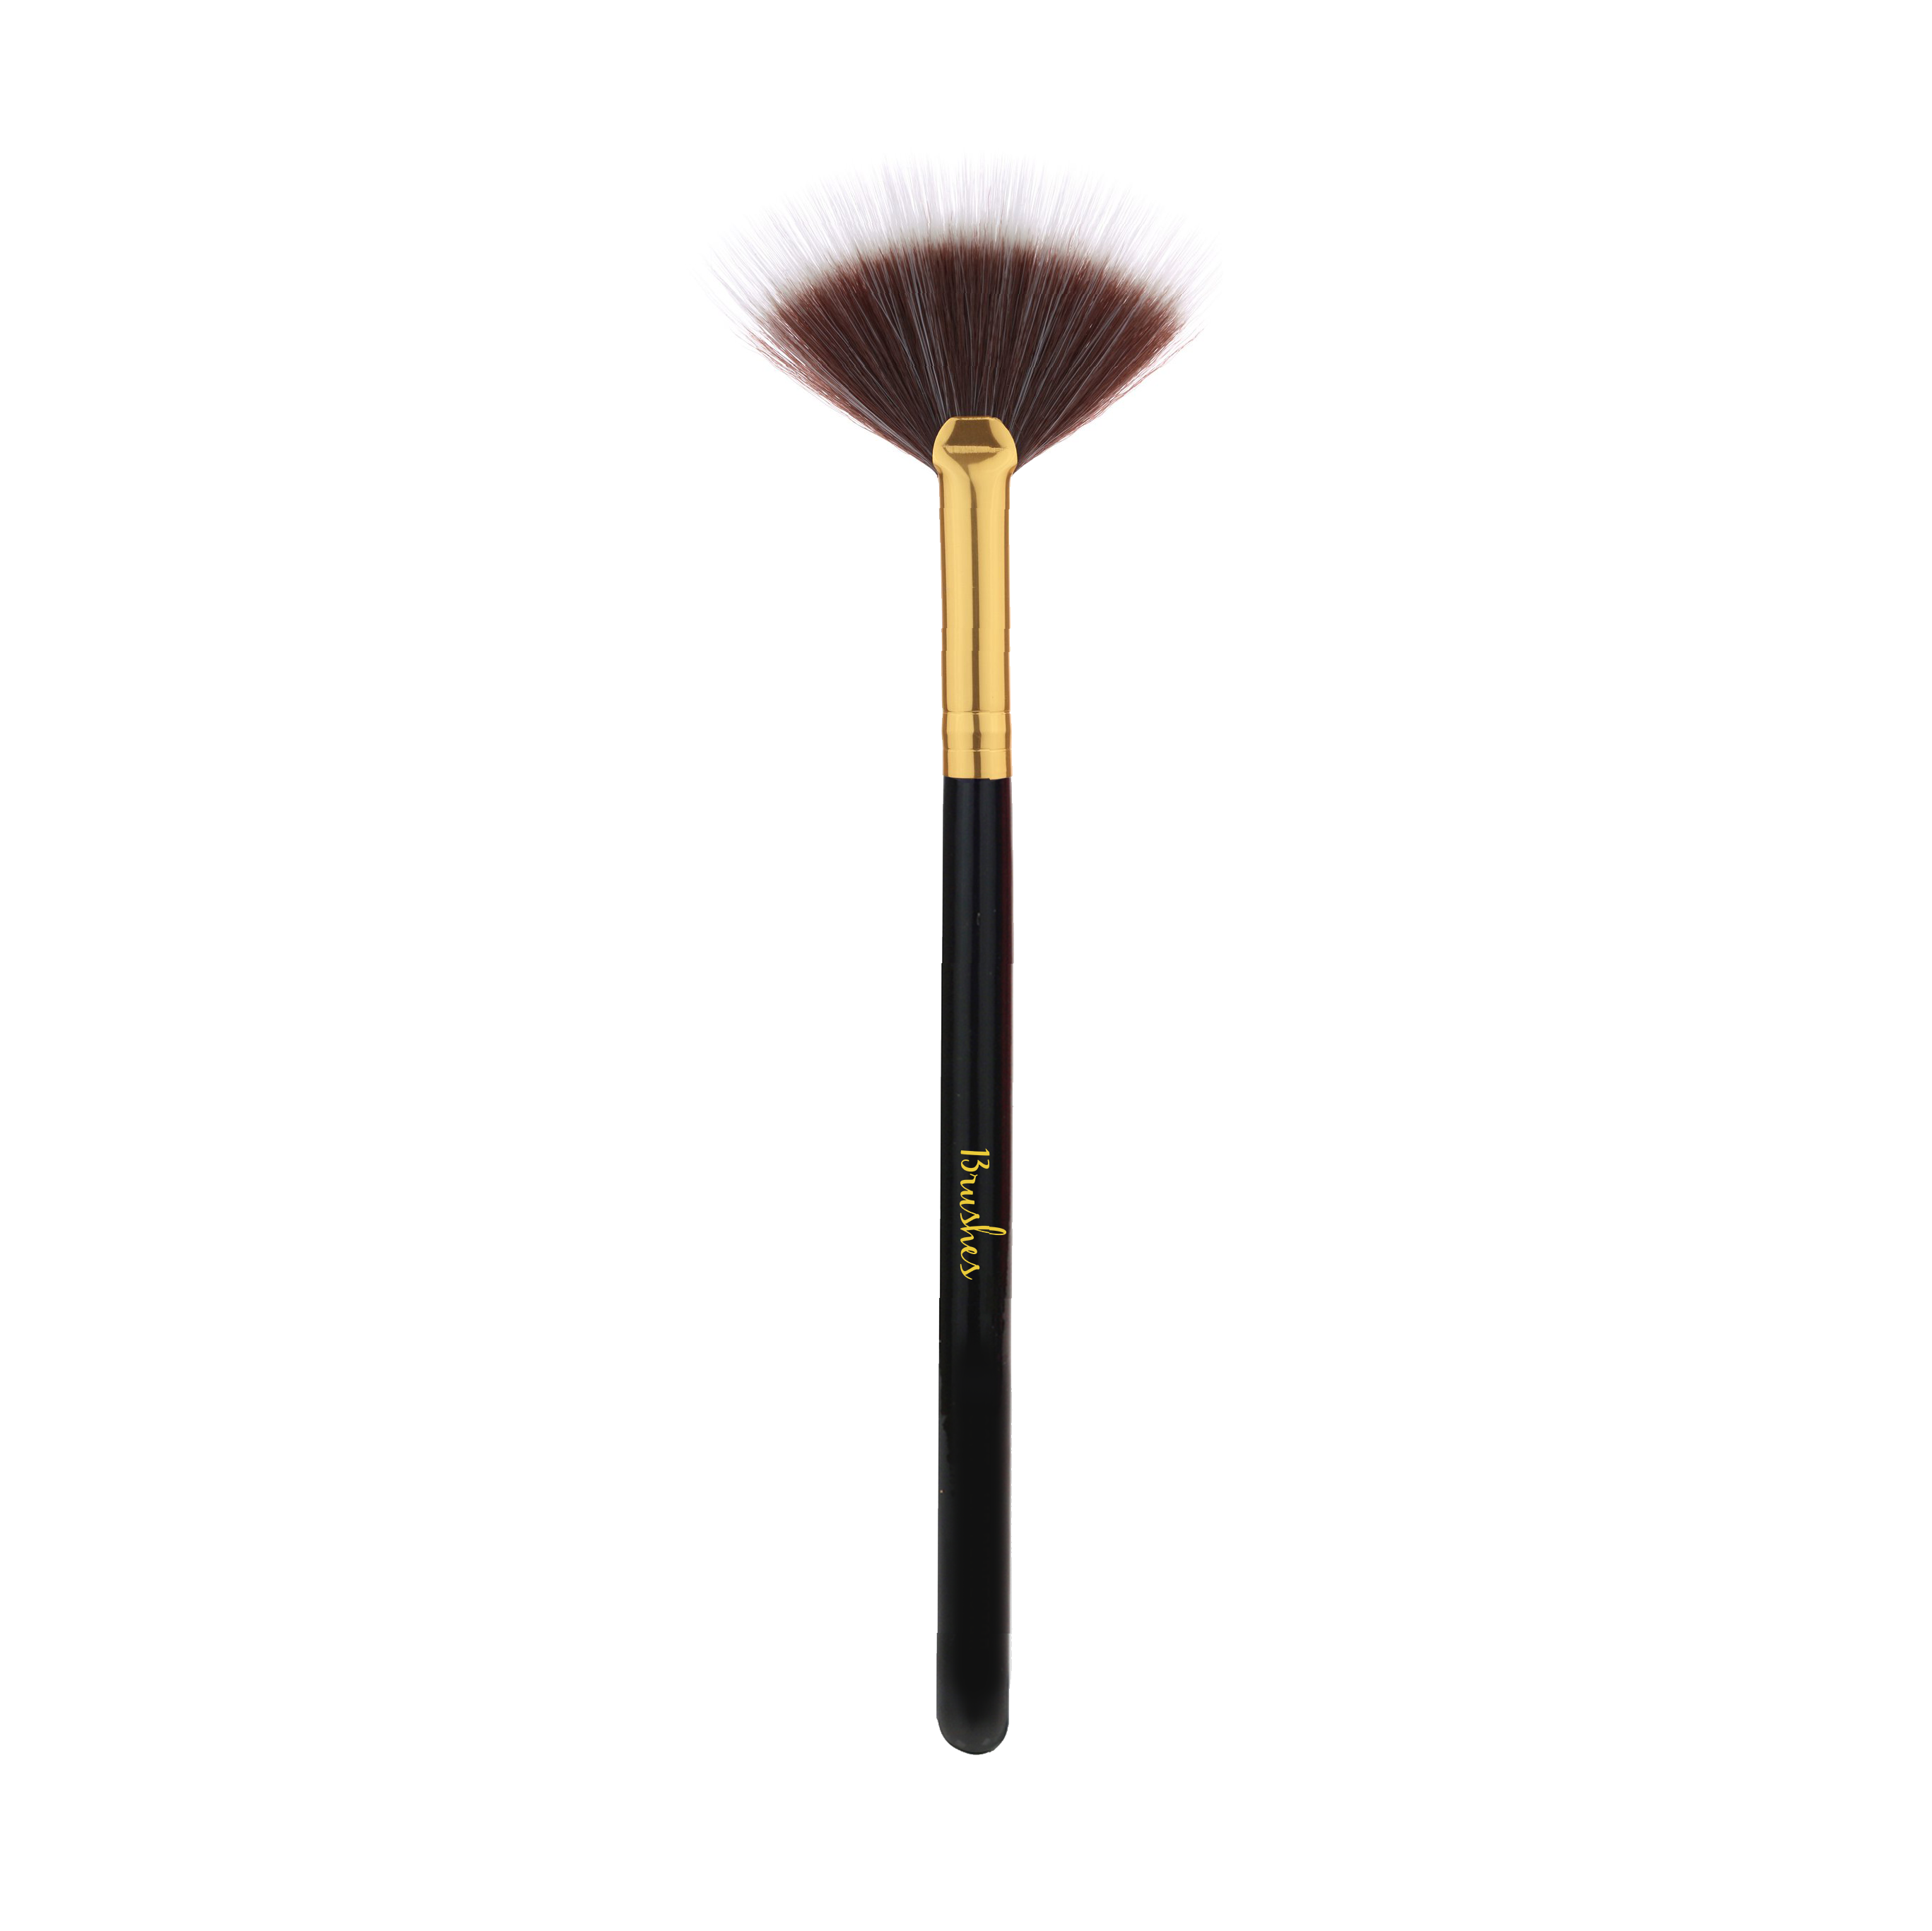 Duo-fibre Fan - 13rushes - Singapore's best makeup brushes